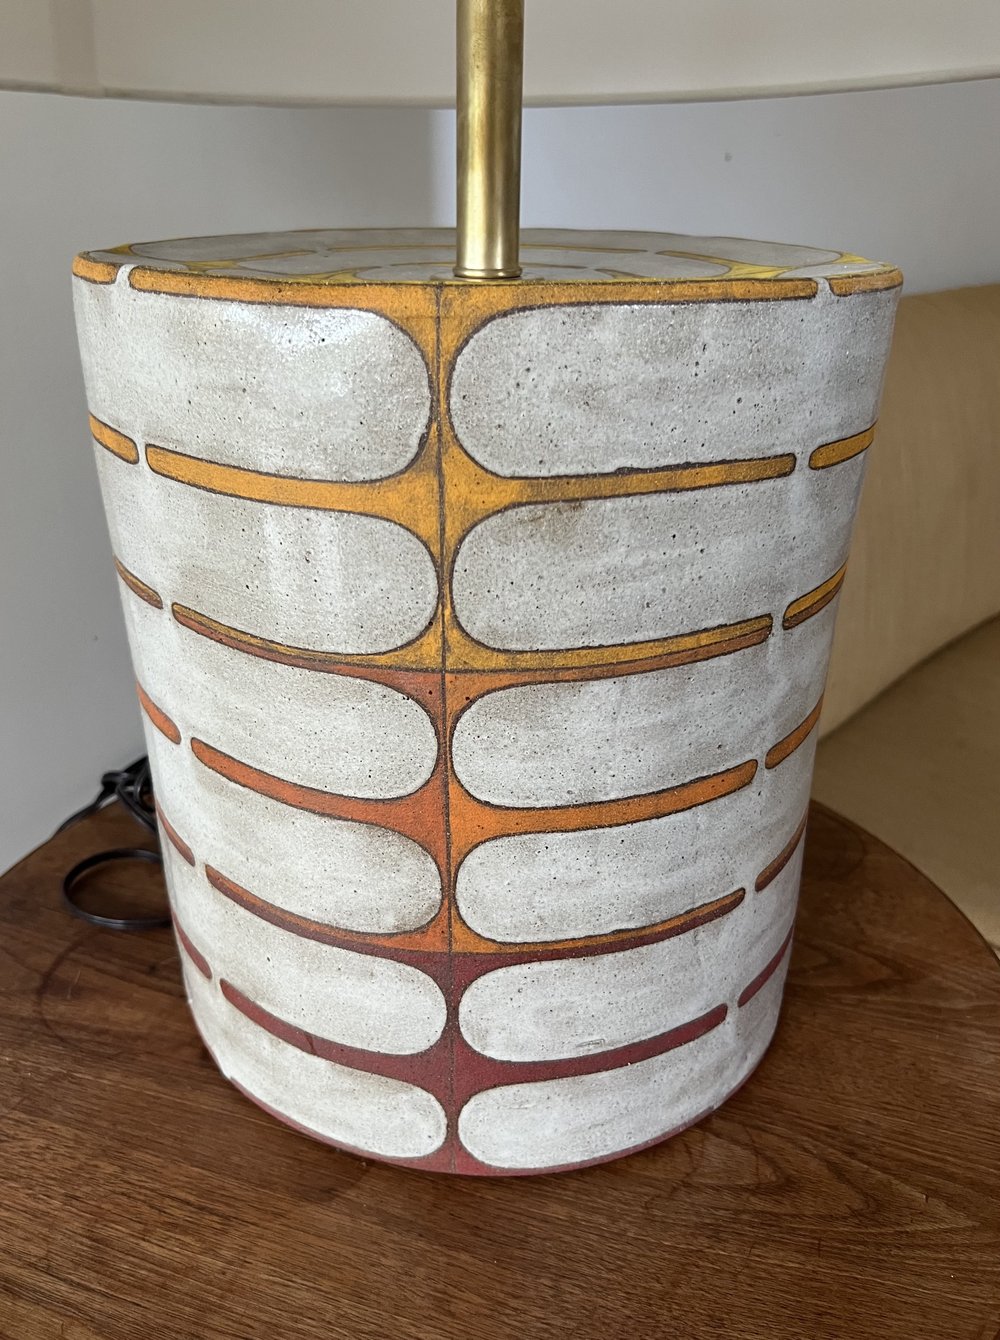 The Stacker Ceramic Lamp - Rory Pots